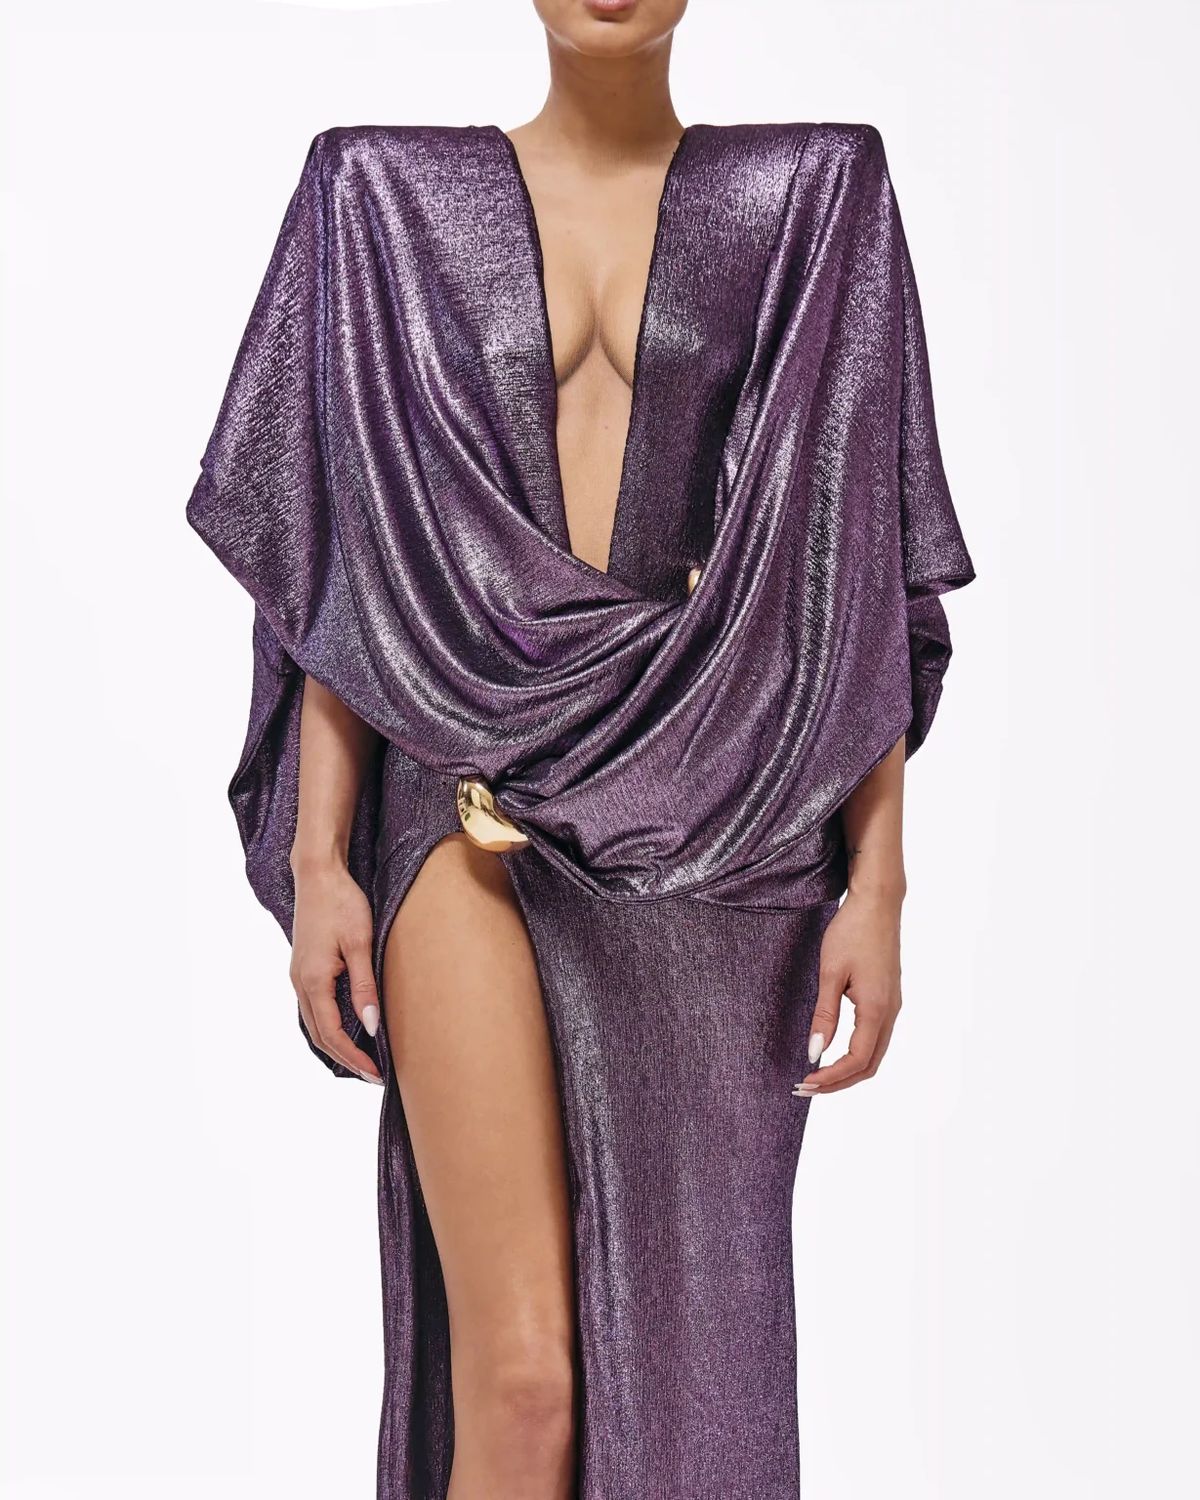 Style metallic-majesty-24-18 Valdrin Sahiti Size S Pageant Purple Side Slit Dress on Queenly